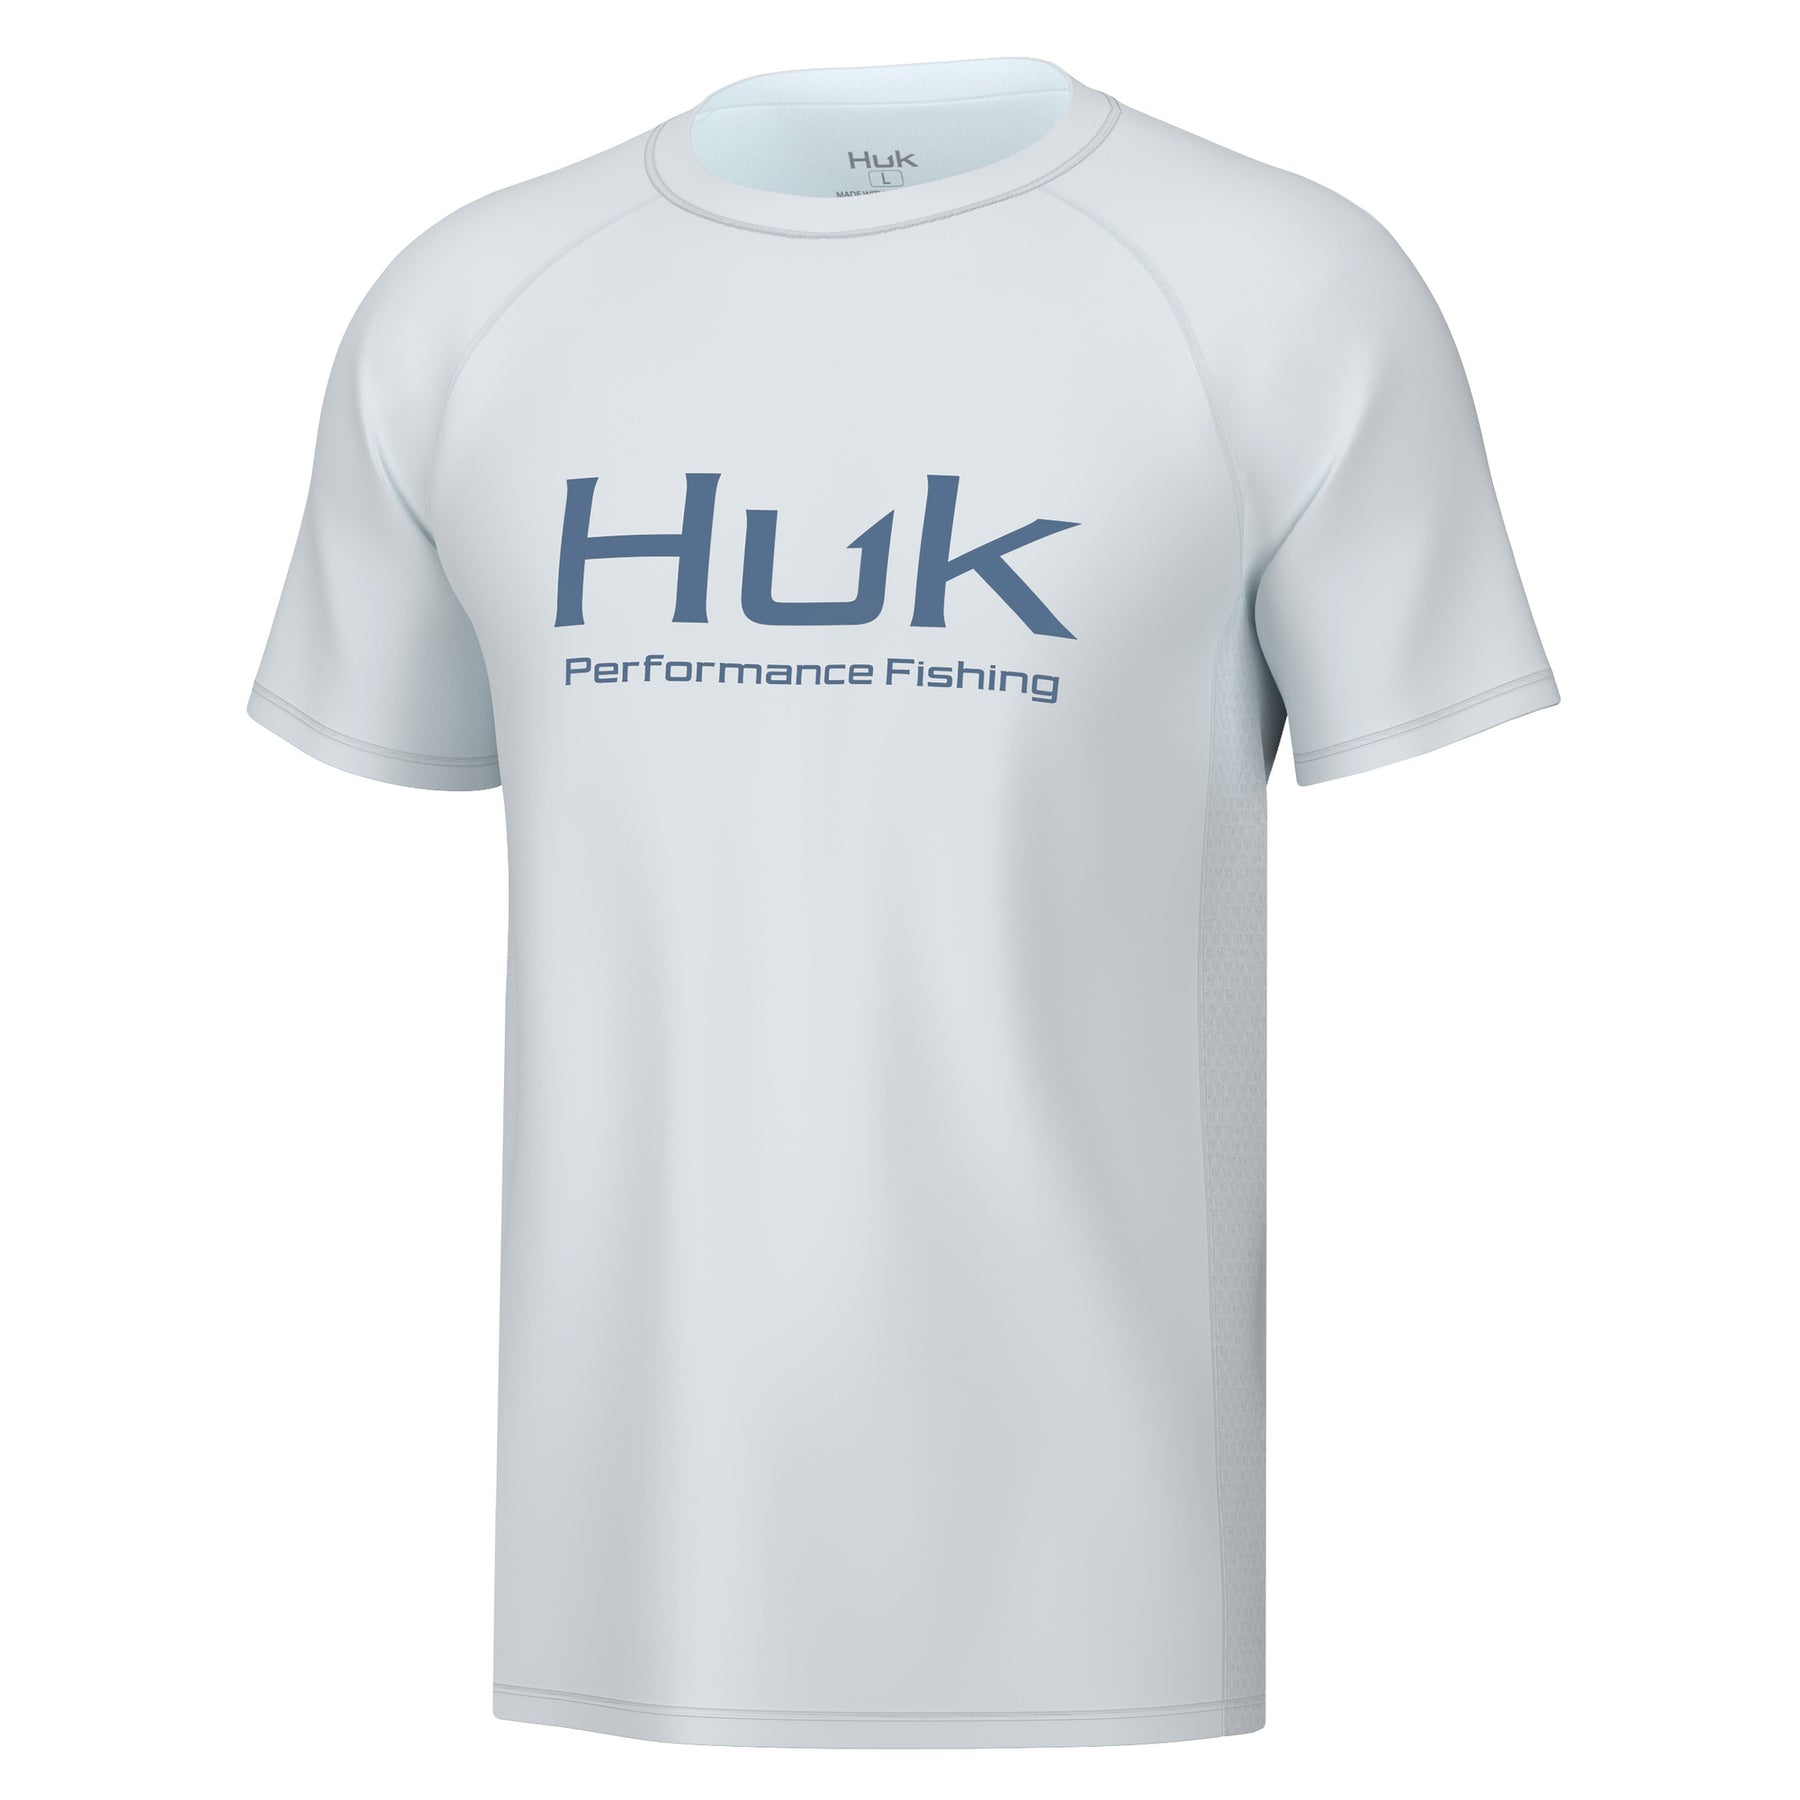 Huk Pursuit Short Sleeve Performance Shirt